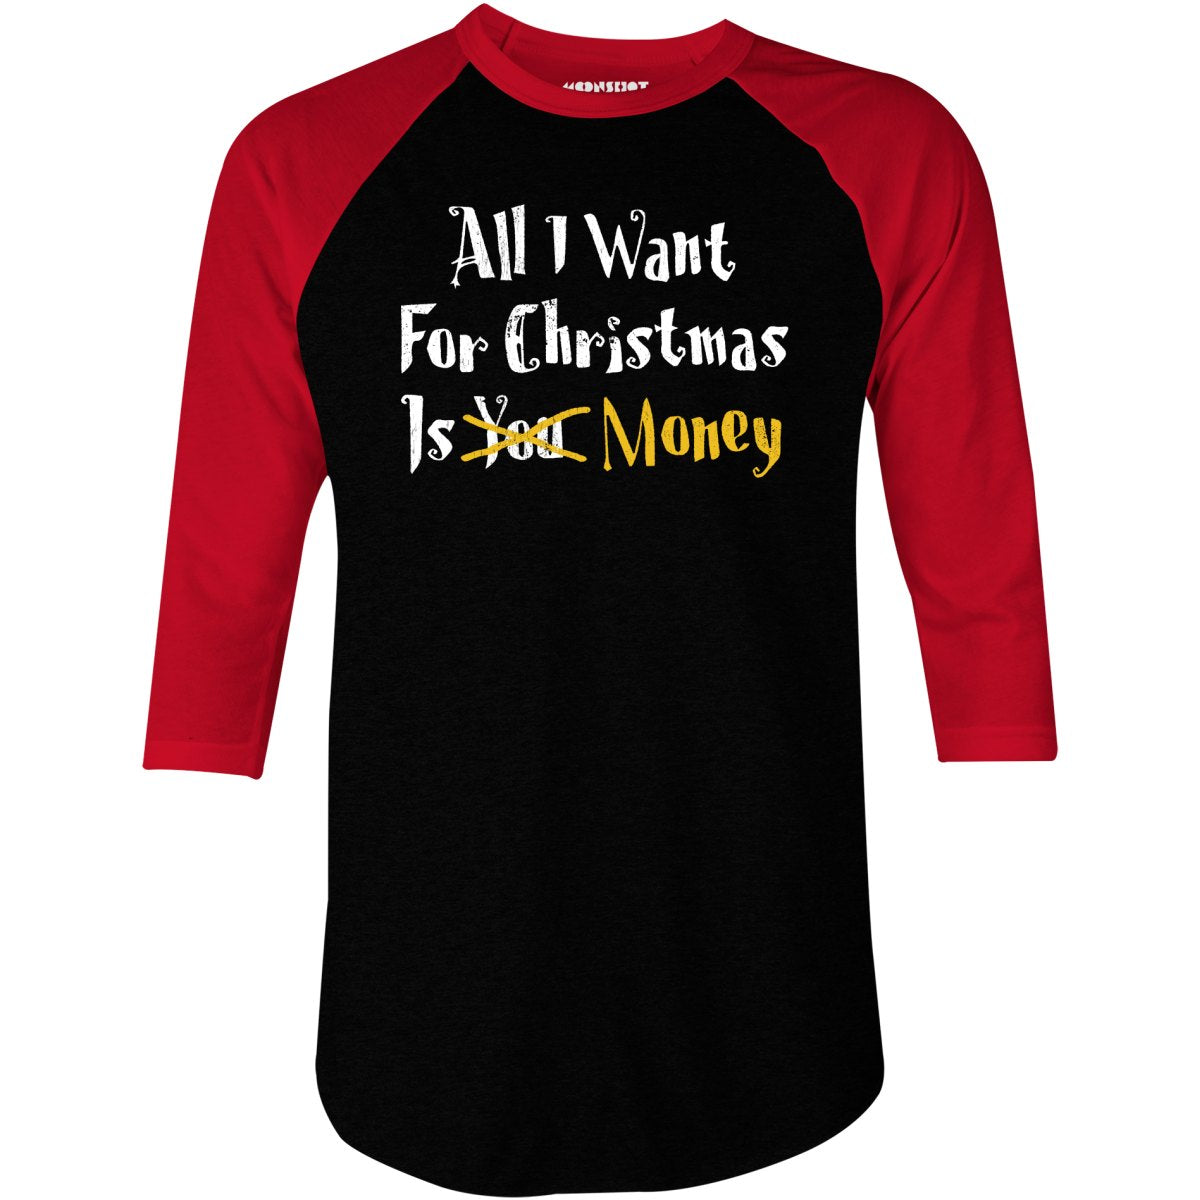 All I Want for Christmas is Money - 3/4 Sleeve Raglan T-Shirt